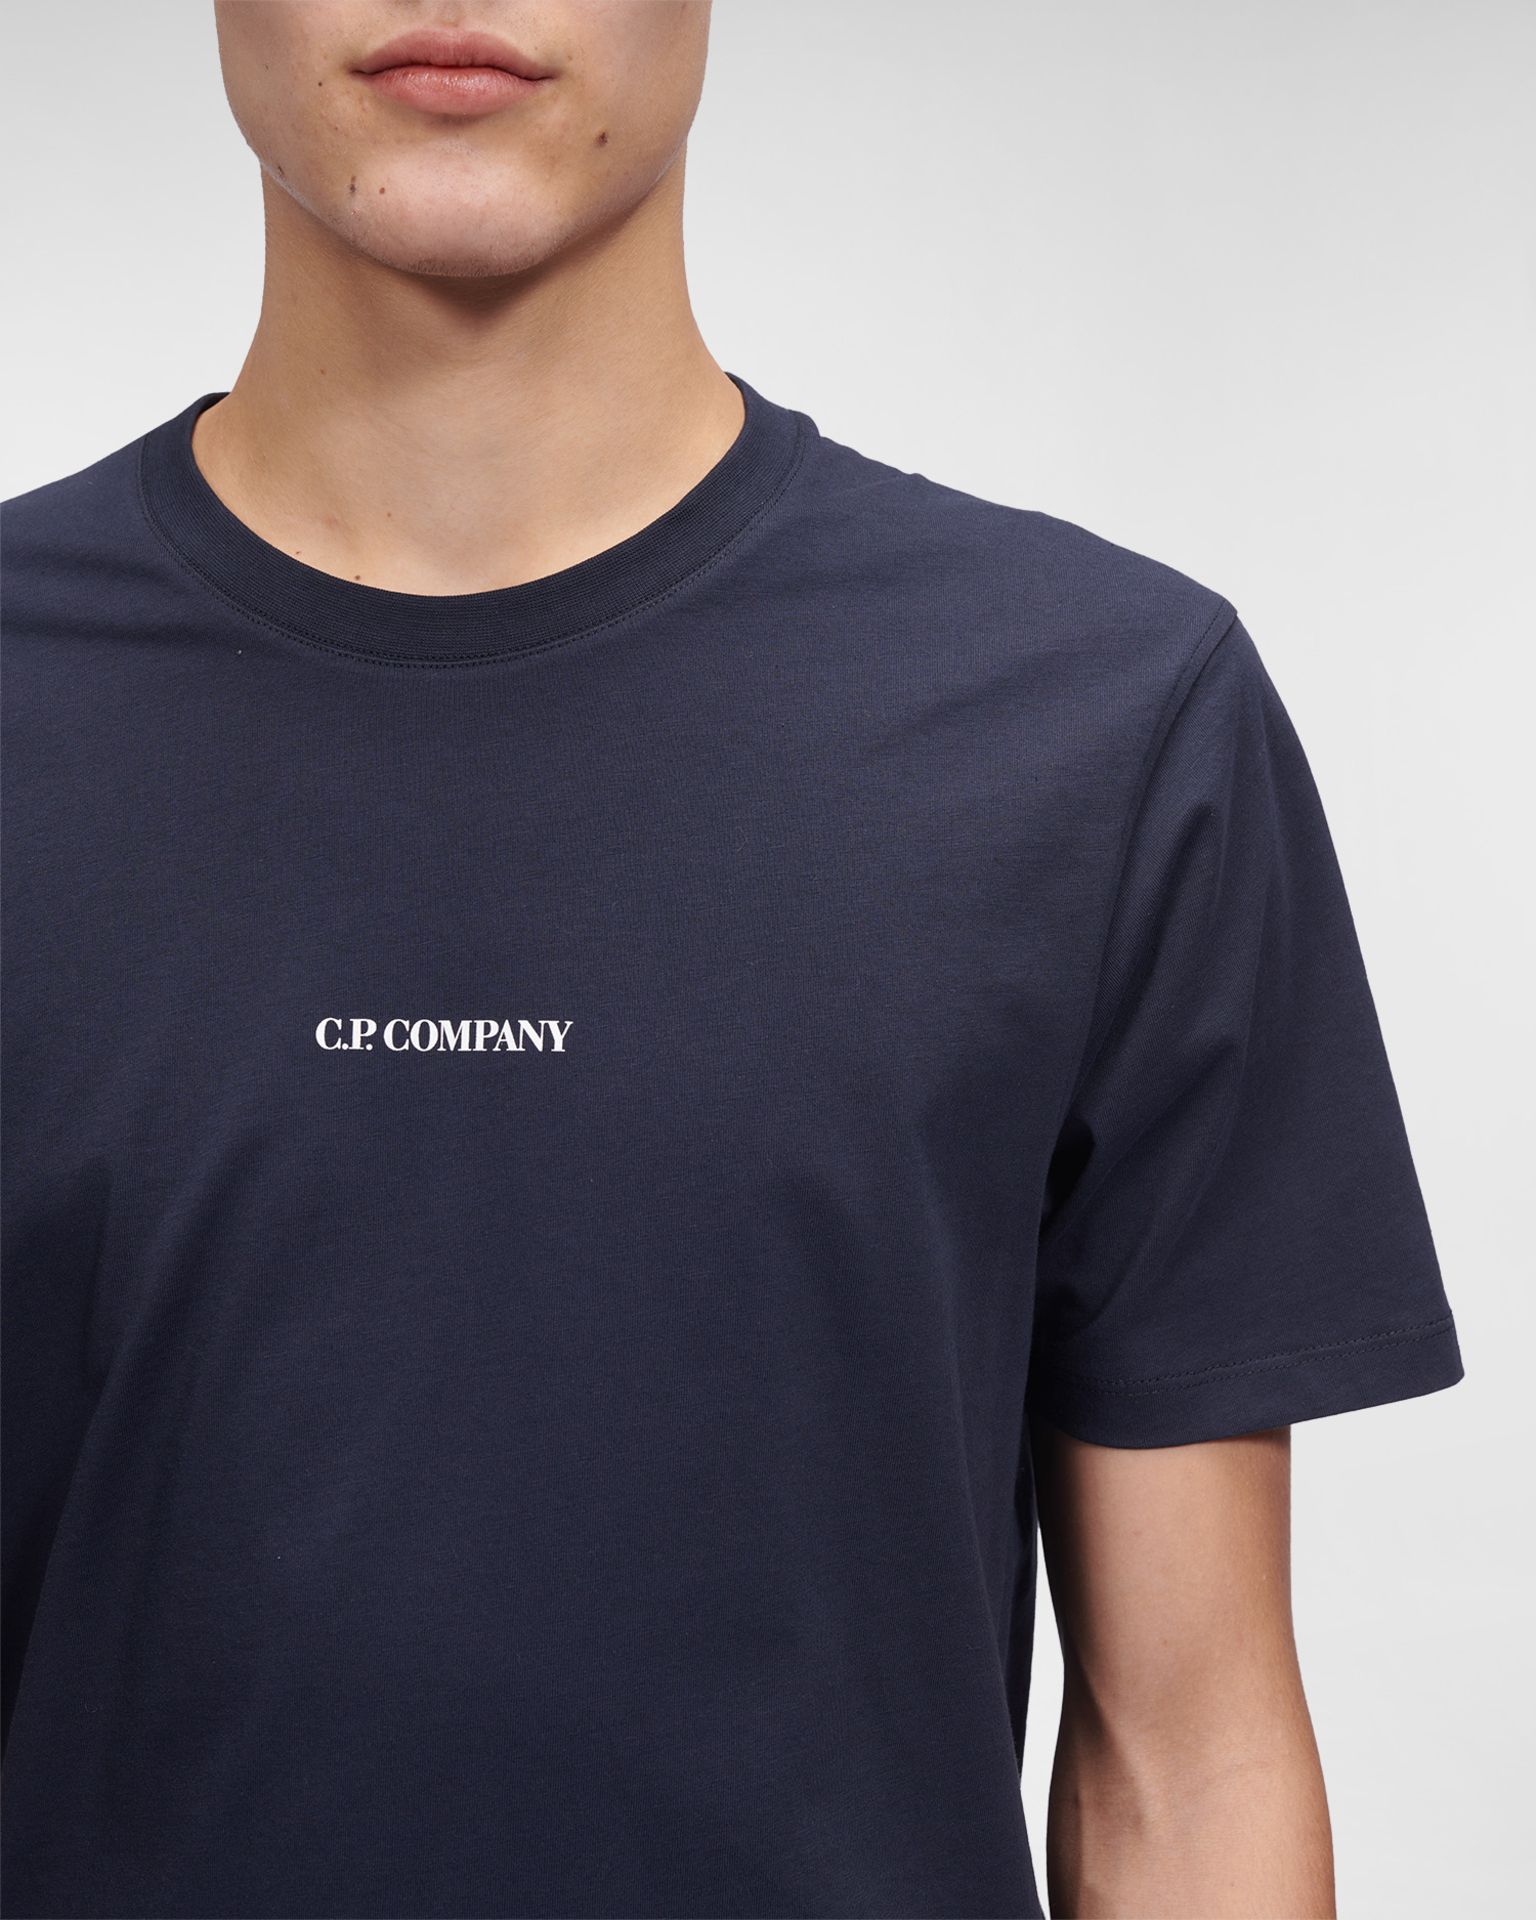 BRAND NEW C.P. COMPANY Logo Short Sleeve T-Shirt - Navy. SIZE XL. RRP £95. (OFC)